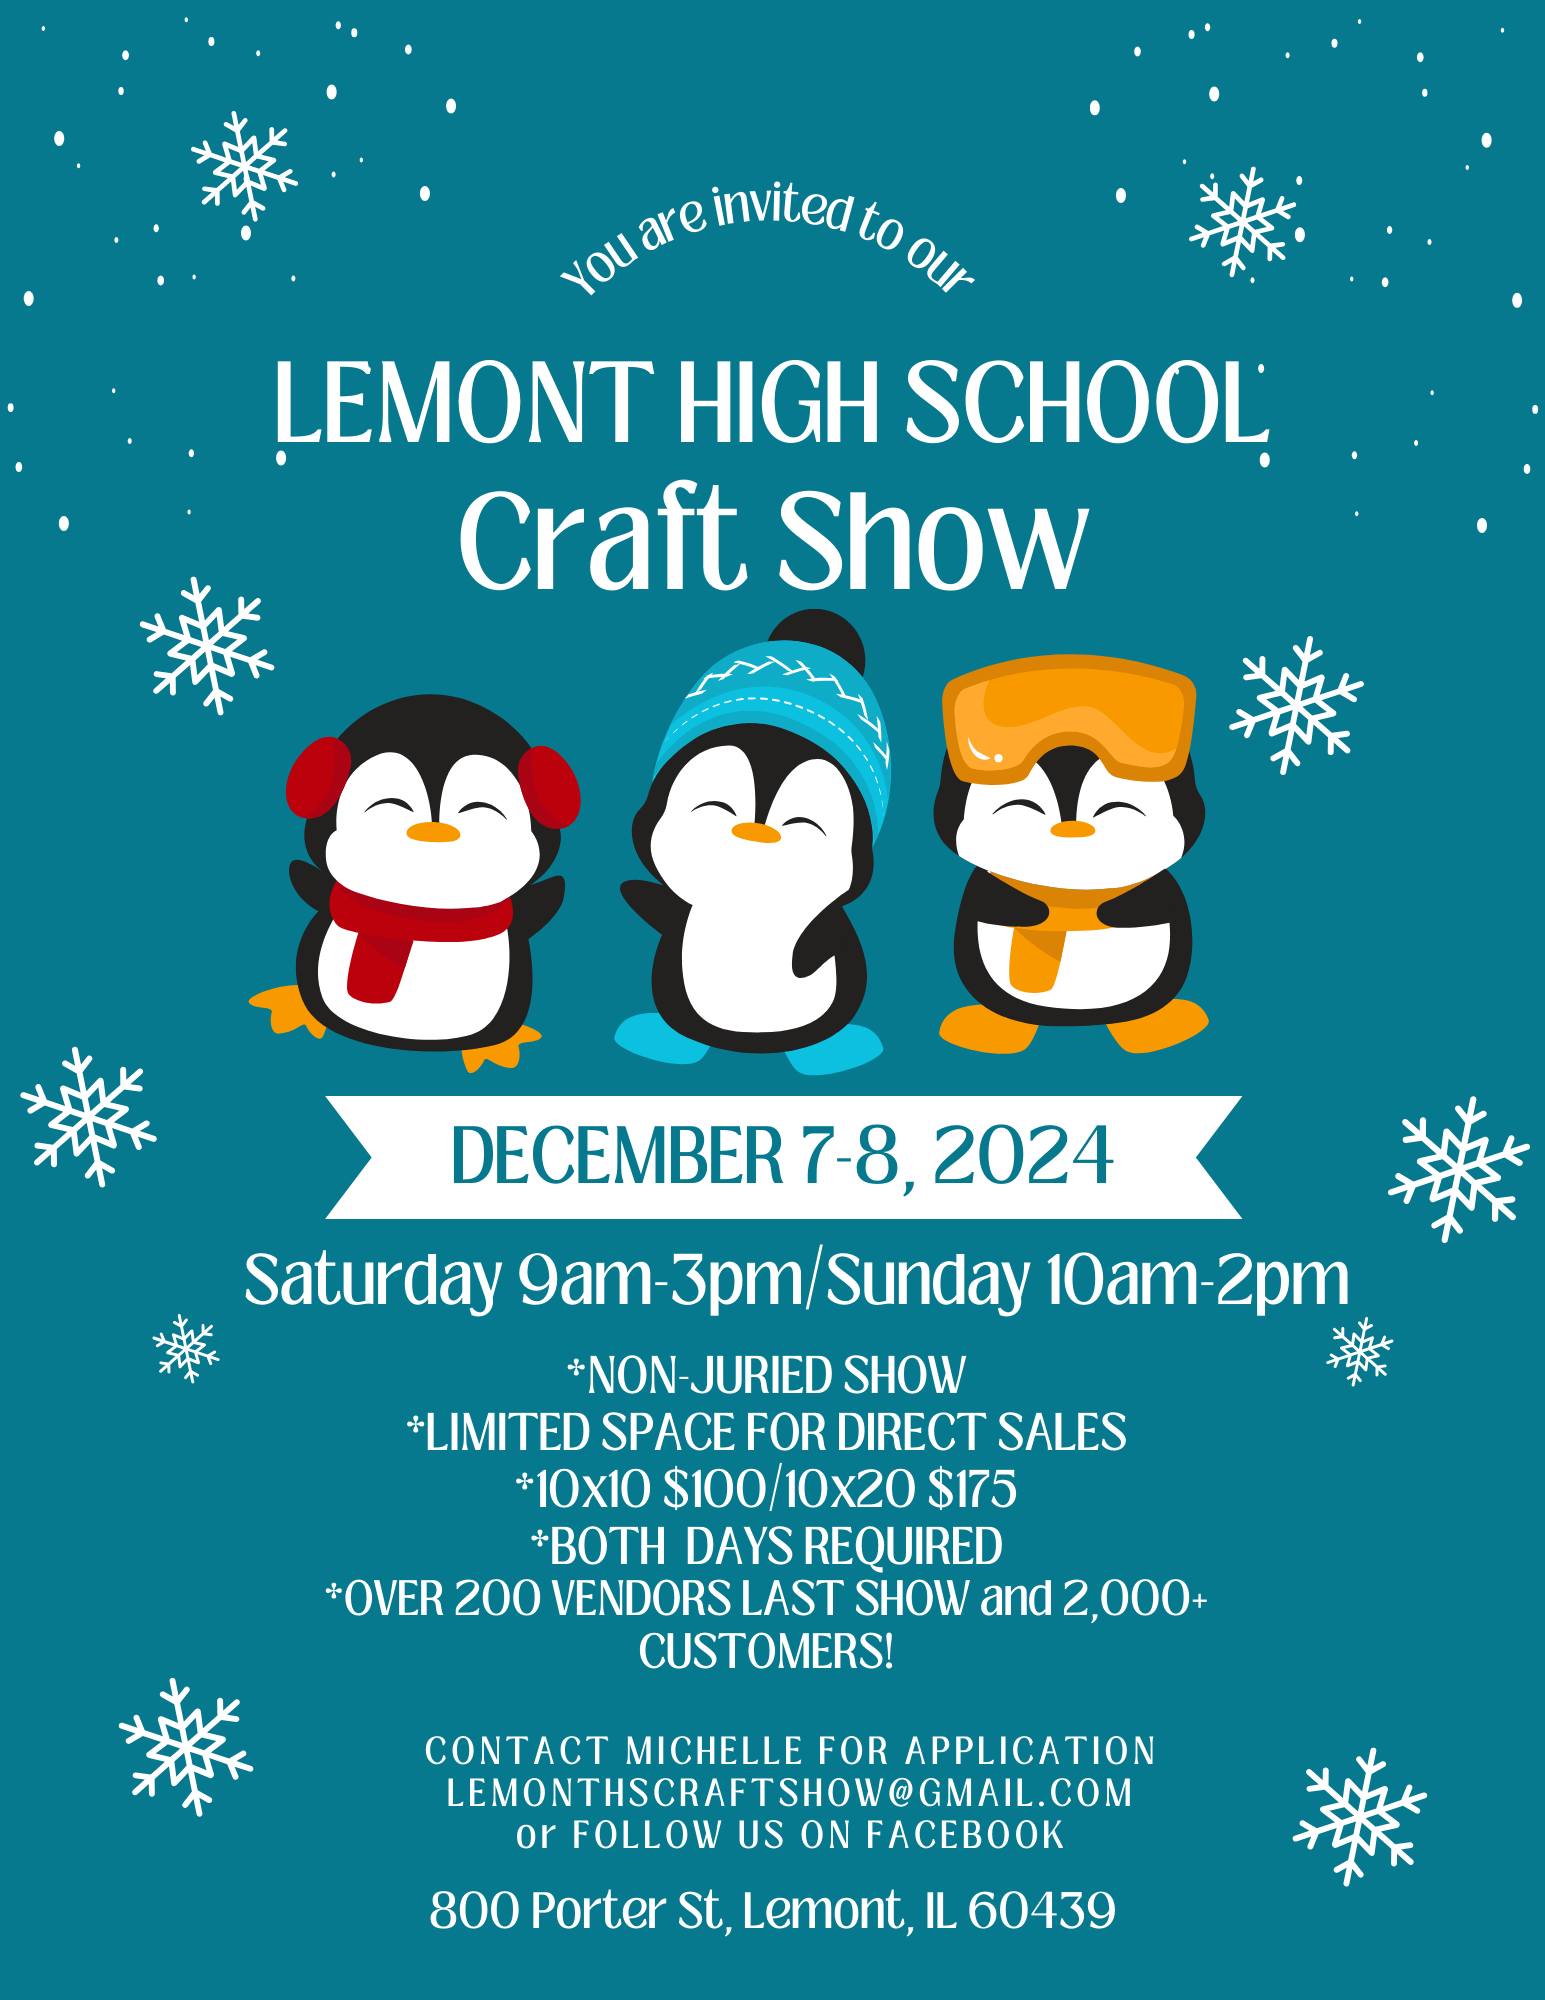 Lemont High School Craft Show